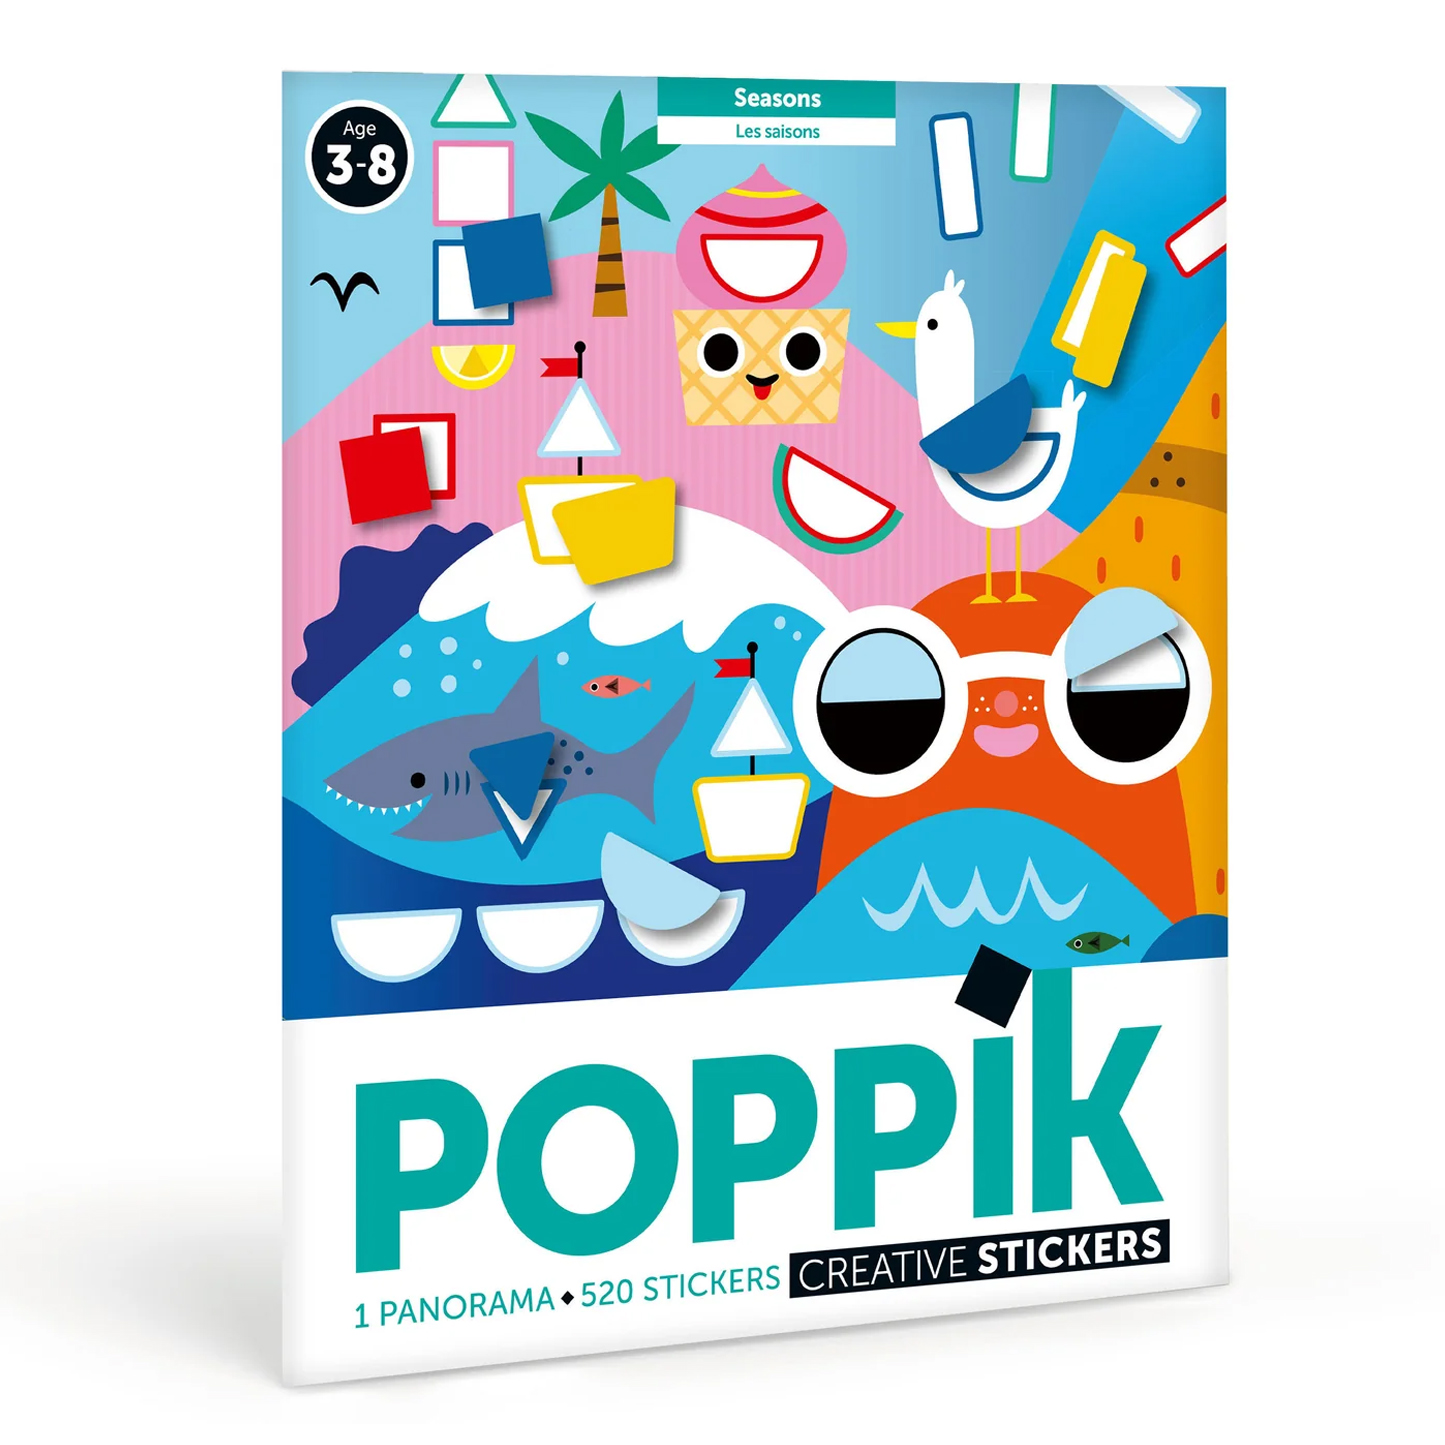 POPPIK Poppik Panorama Sticker Poster - Seasons